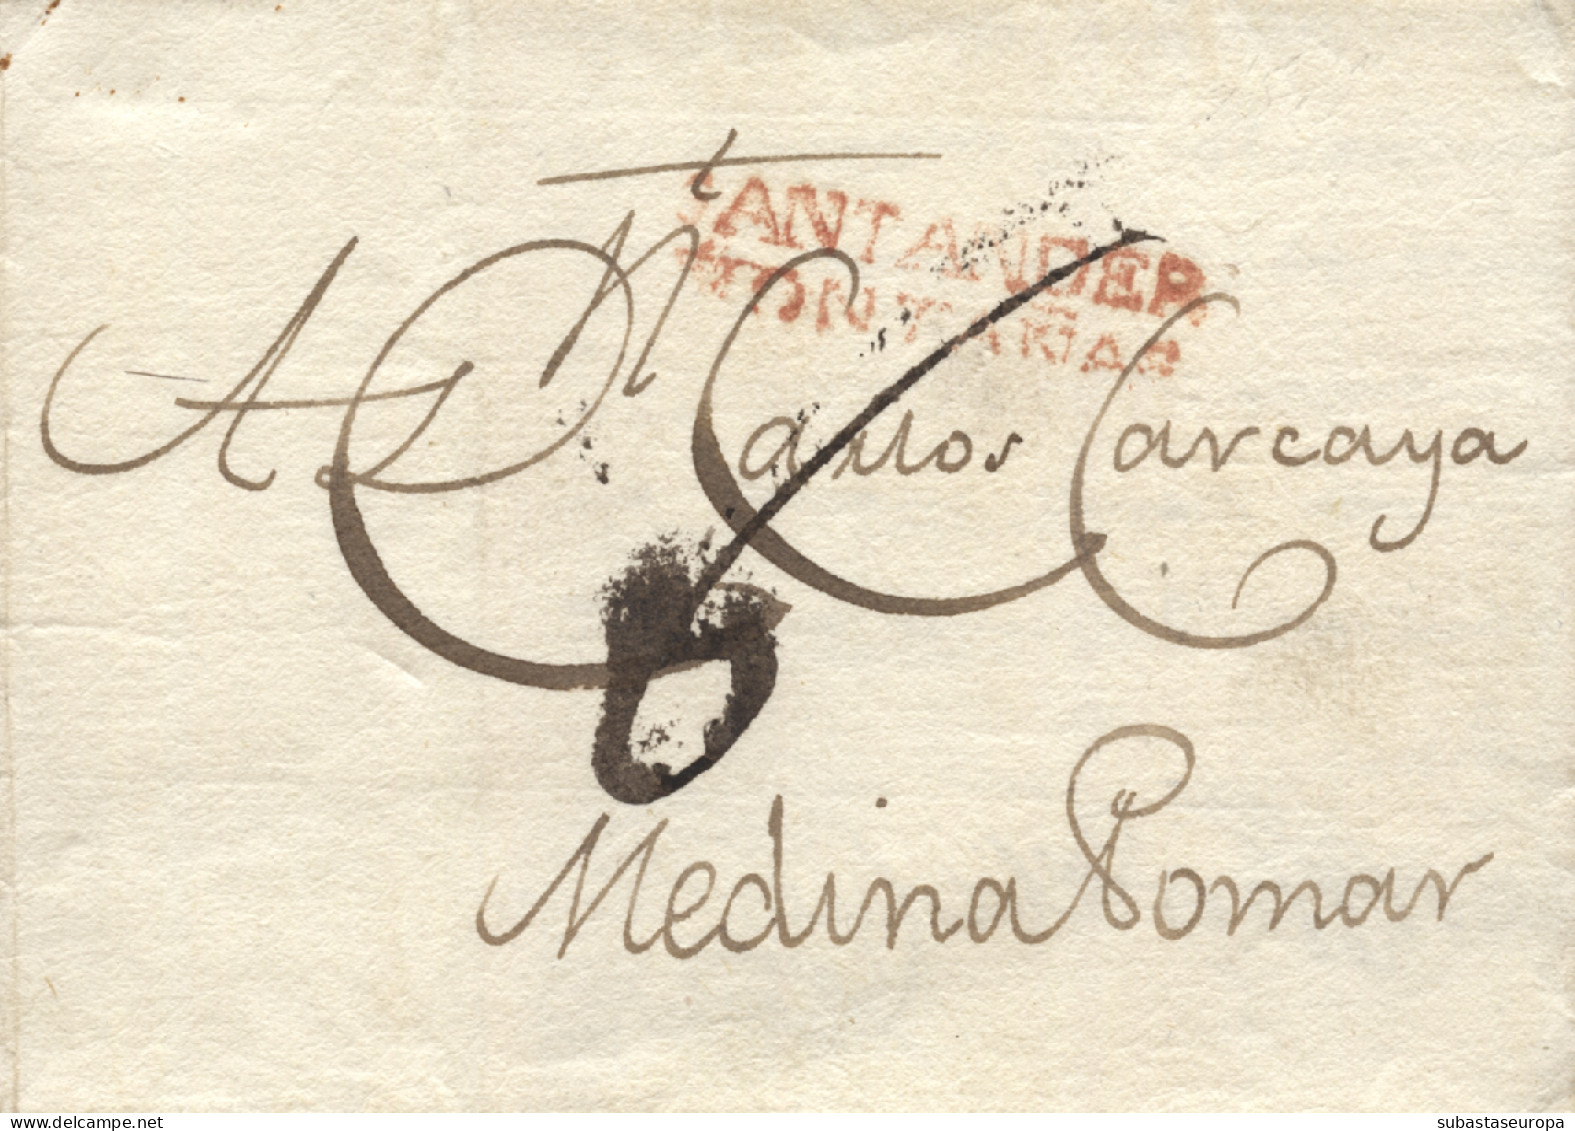 D.P. 9. 1817. Carta De Santander A Medina De Pomar (Burgos). Marca En Rojo 8R. Porteo Manuscrito "6". Preciosa. - ...-1850 Préphilatélie